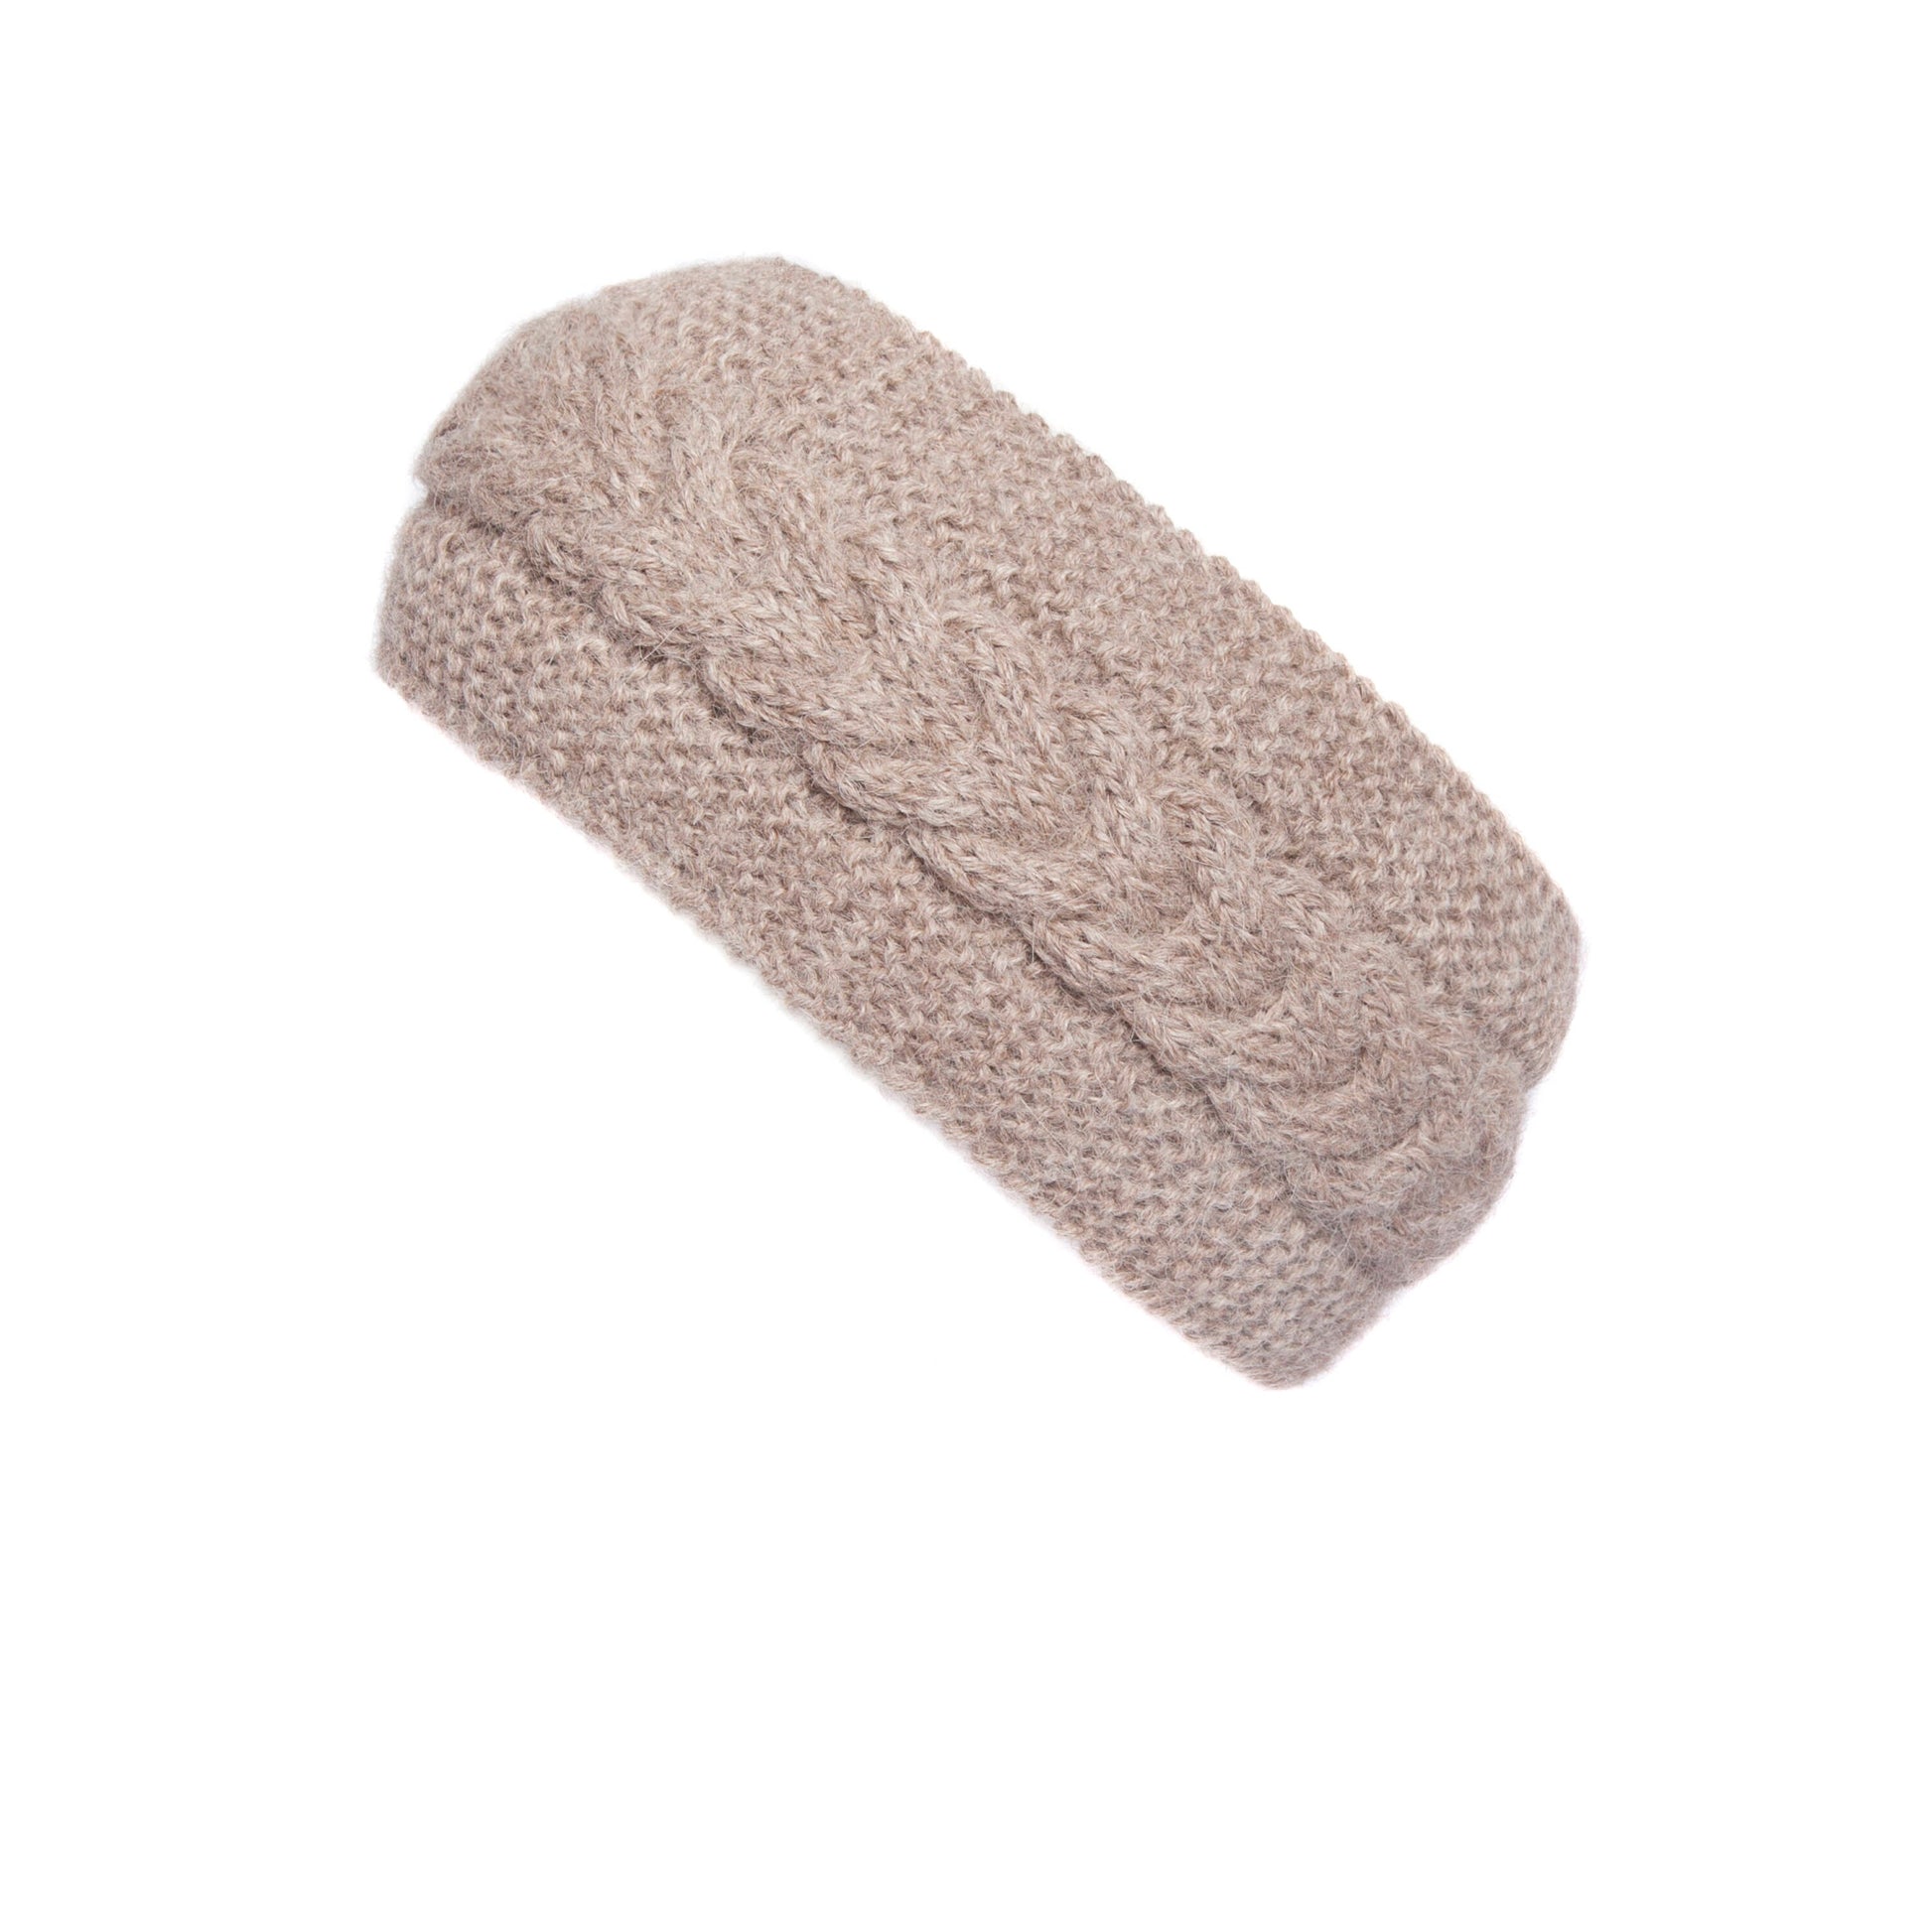 Head band Hairband Alpaca Wool Knit, Ski band, knitted ear warmer, hair scarf, headscarf, warm bandana, plastic free, eco gift, 100% Alpaca